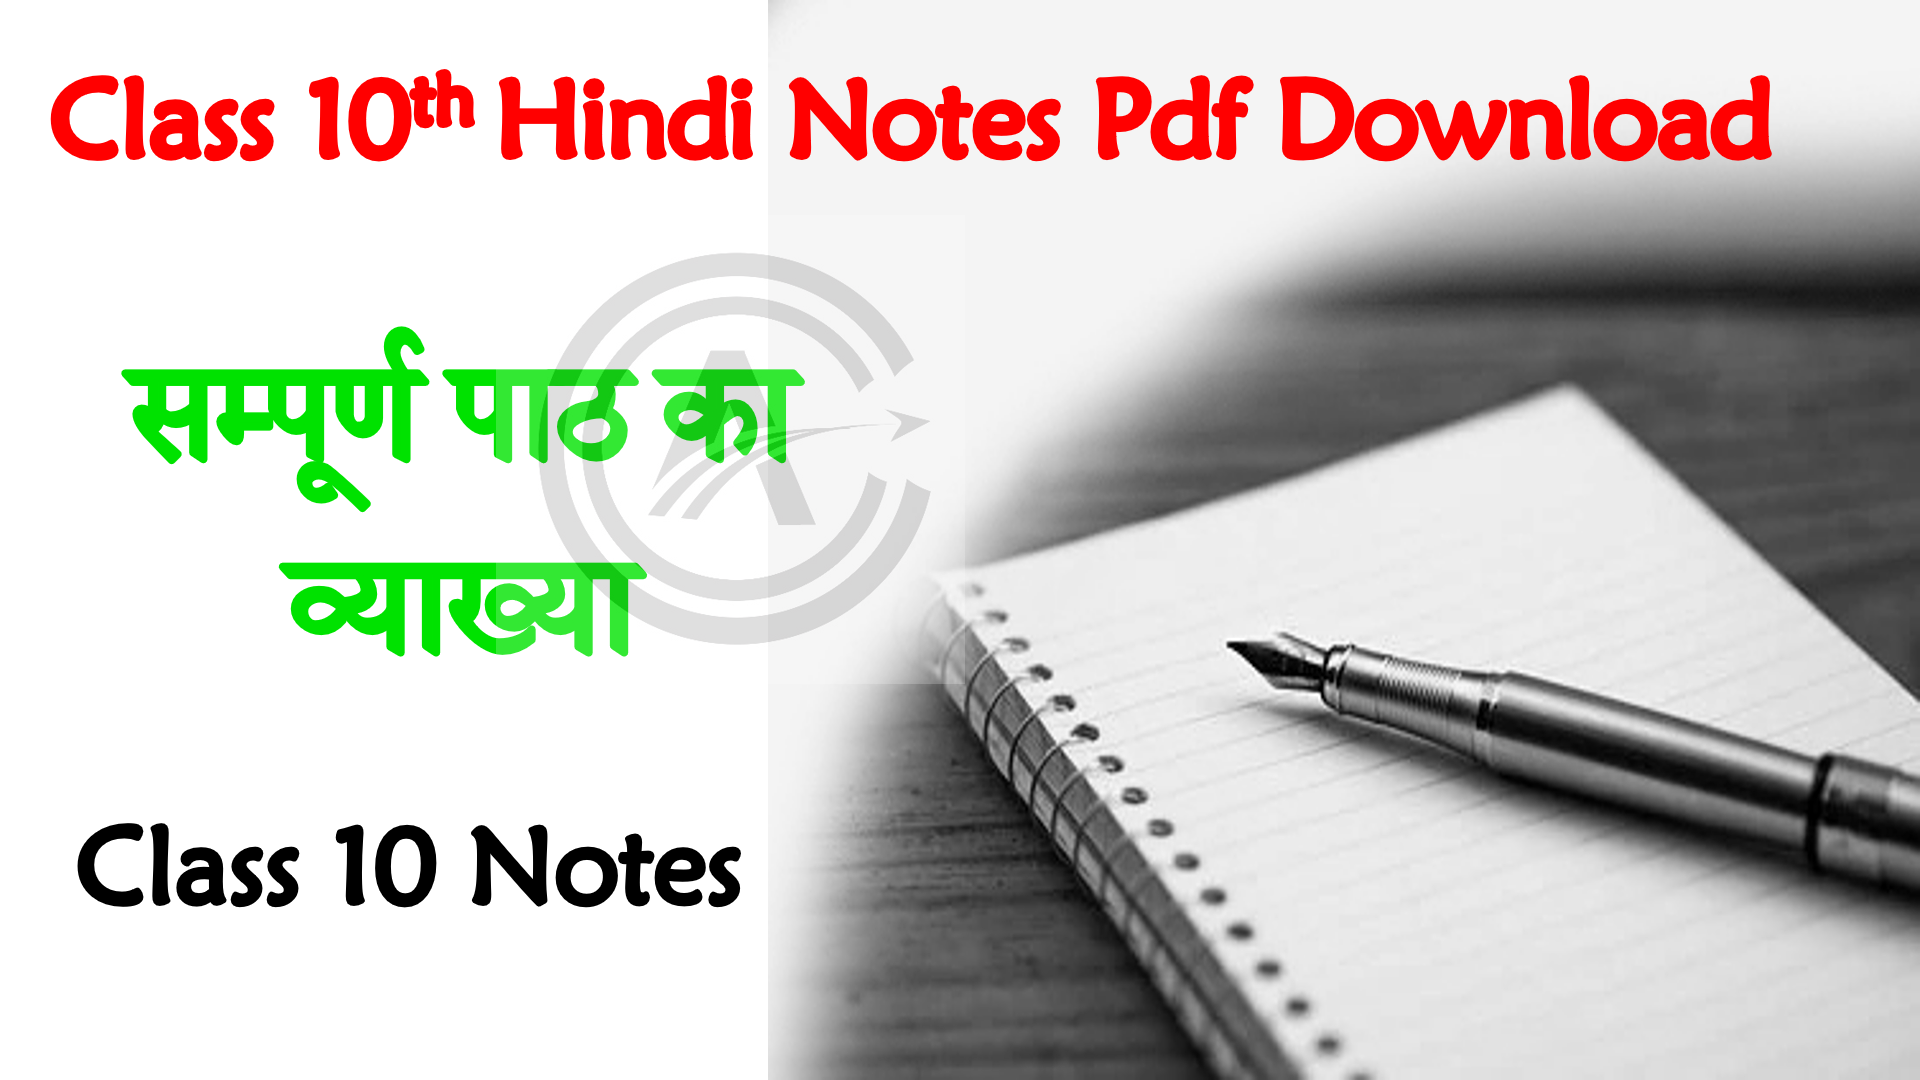 Bihar Board Class 10th Hindi Notes Pdf